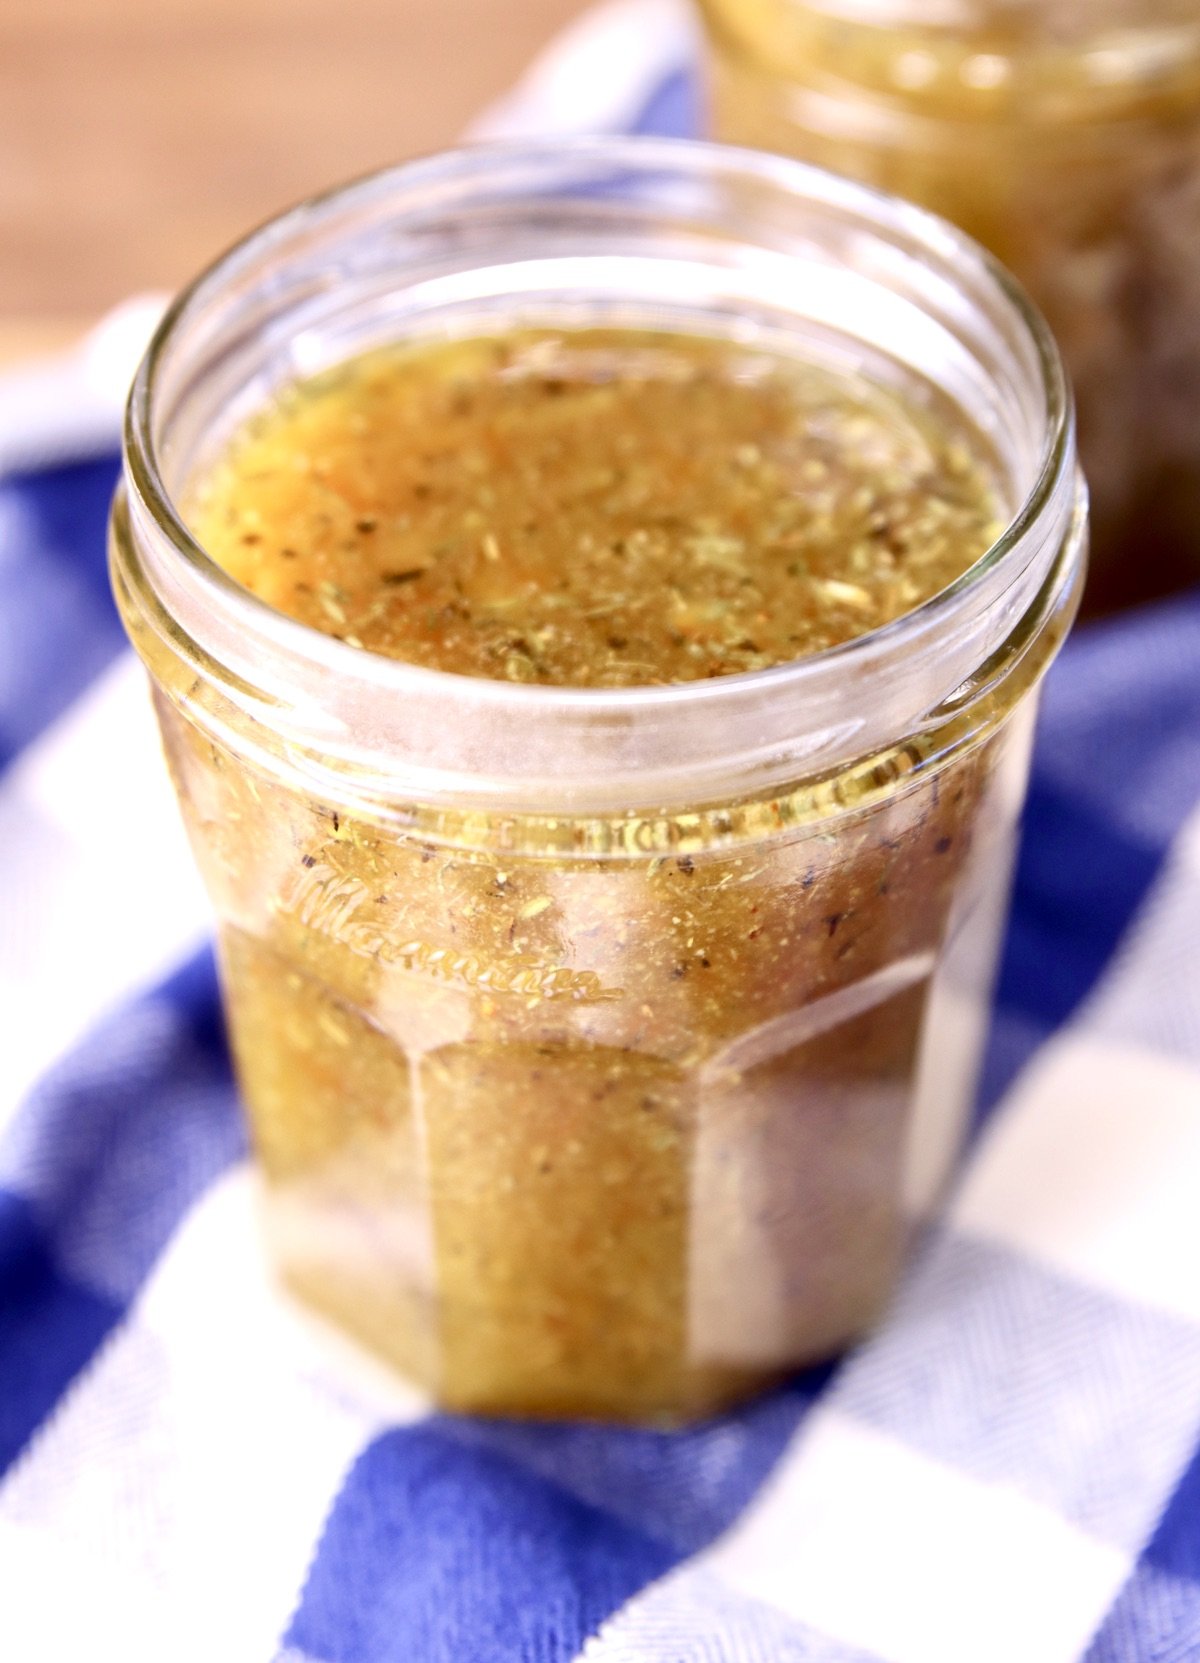 orange marmalade sauce in a jar